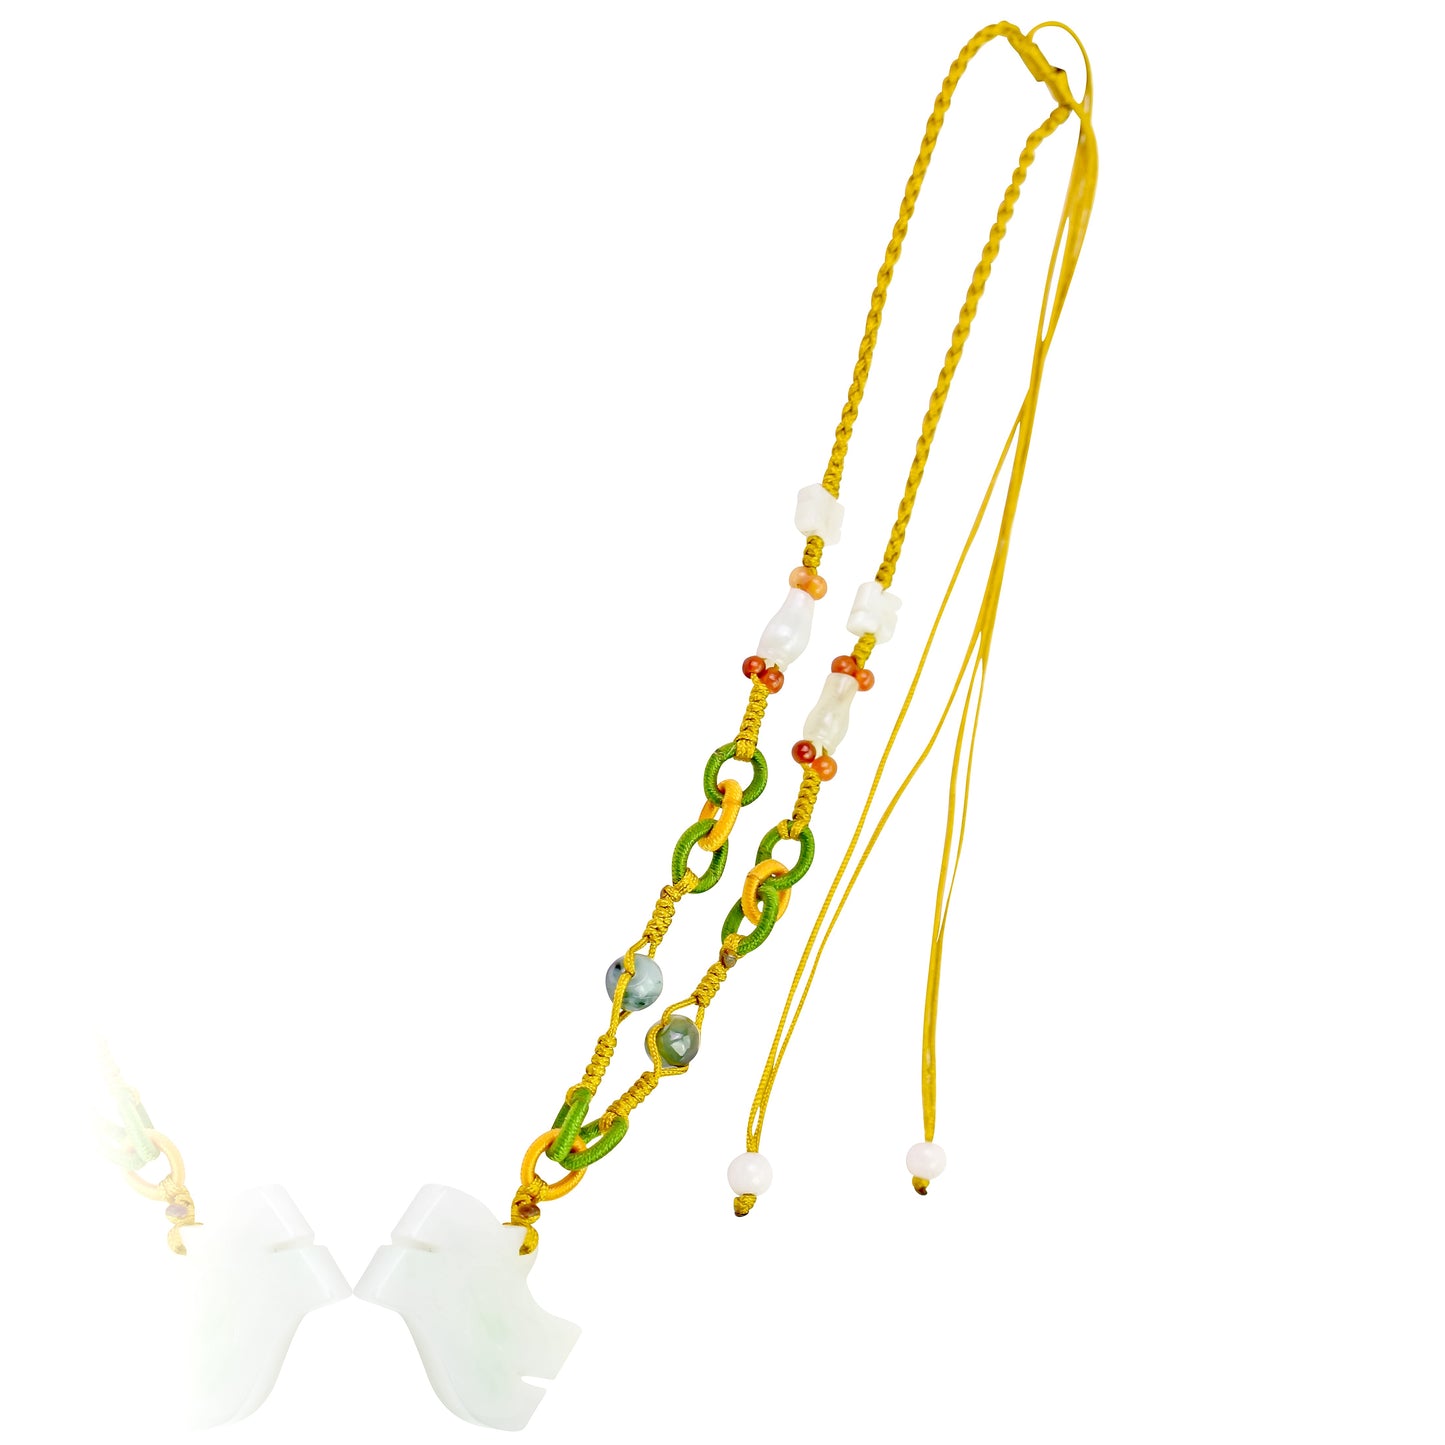 Aquarius Astrology Handmade Jade Necklace Single Pendant with Yellow Cord